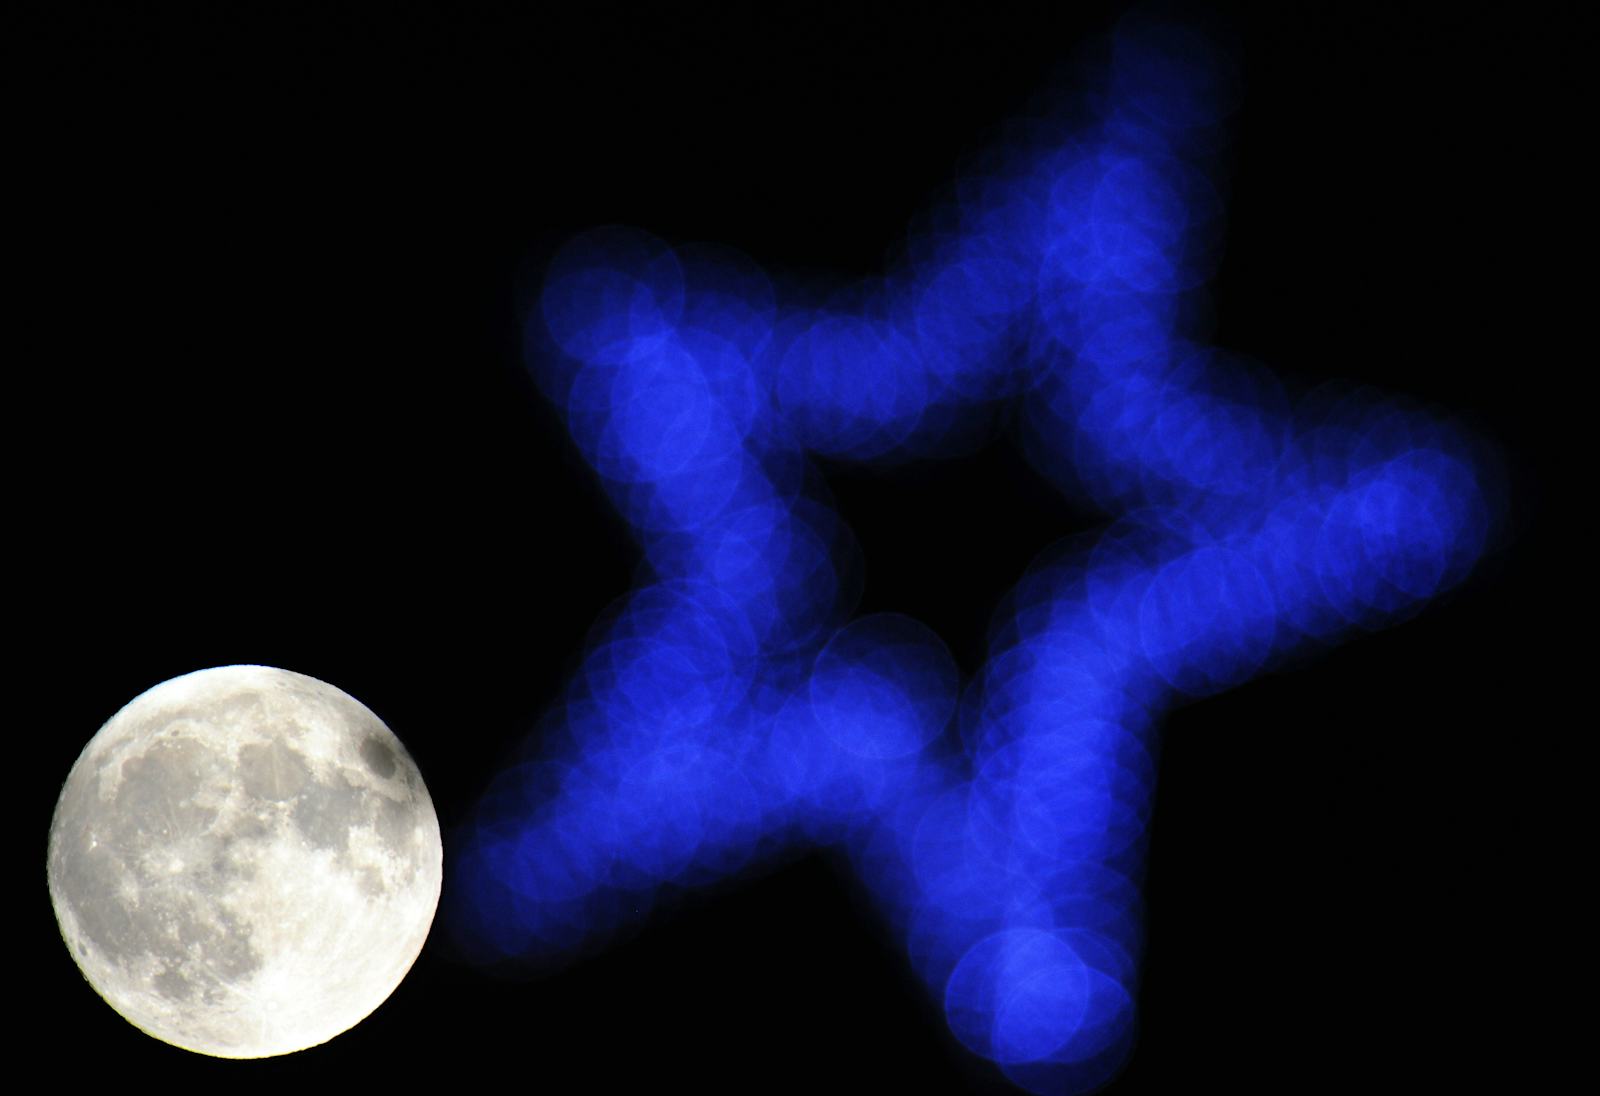 Photos Of The Christmas Full Moon Show A Rare, Beautiful Lunar Event